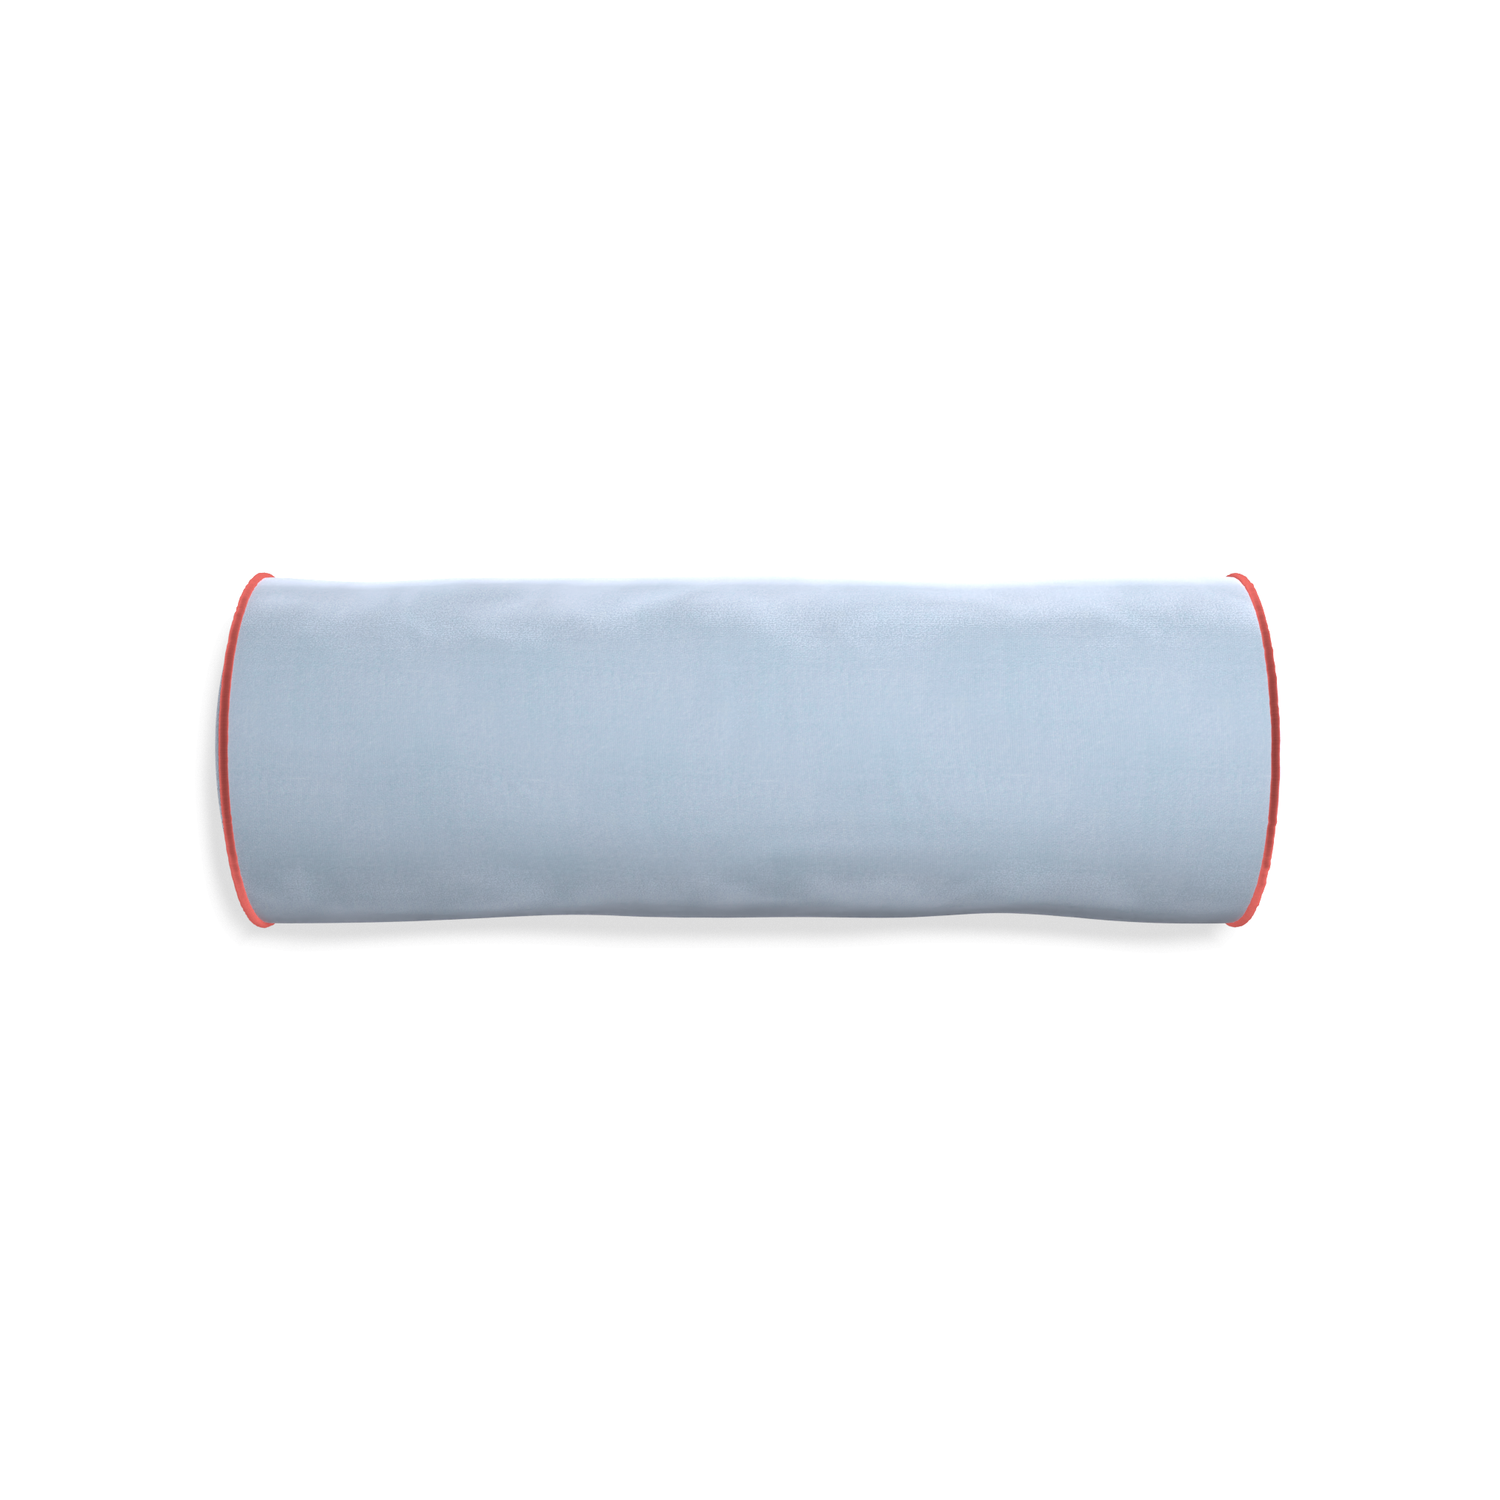 bolster light blue velvet pillow with coral piping 